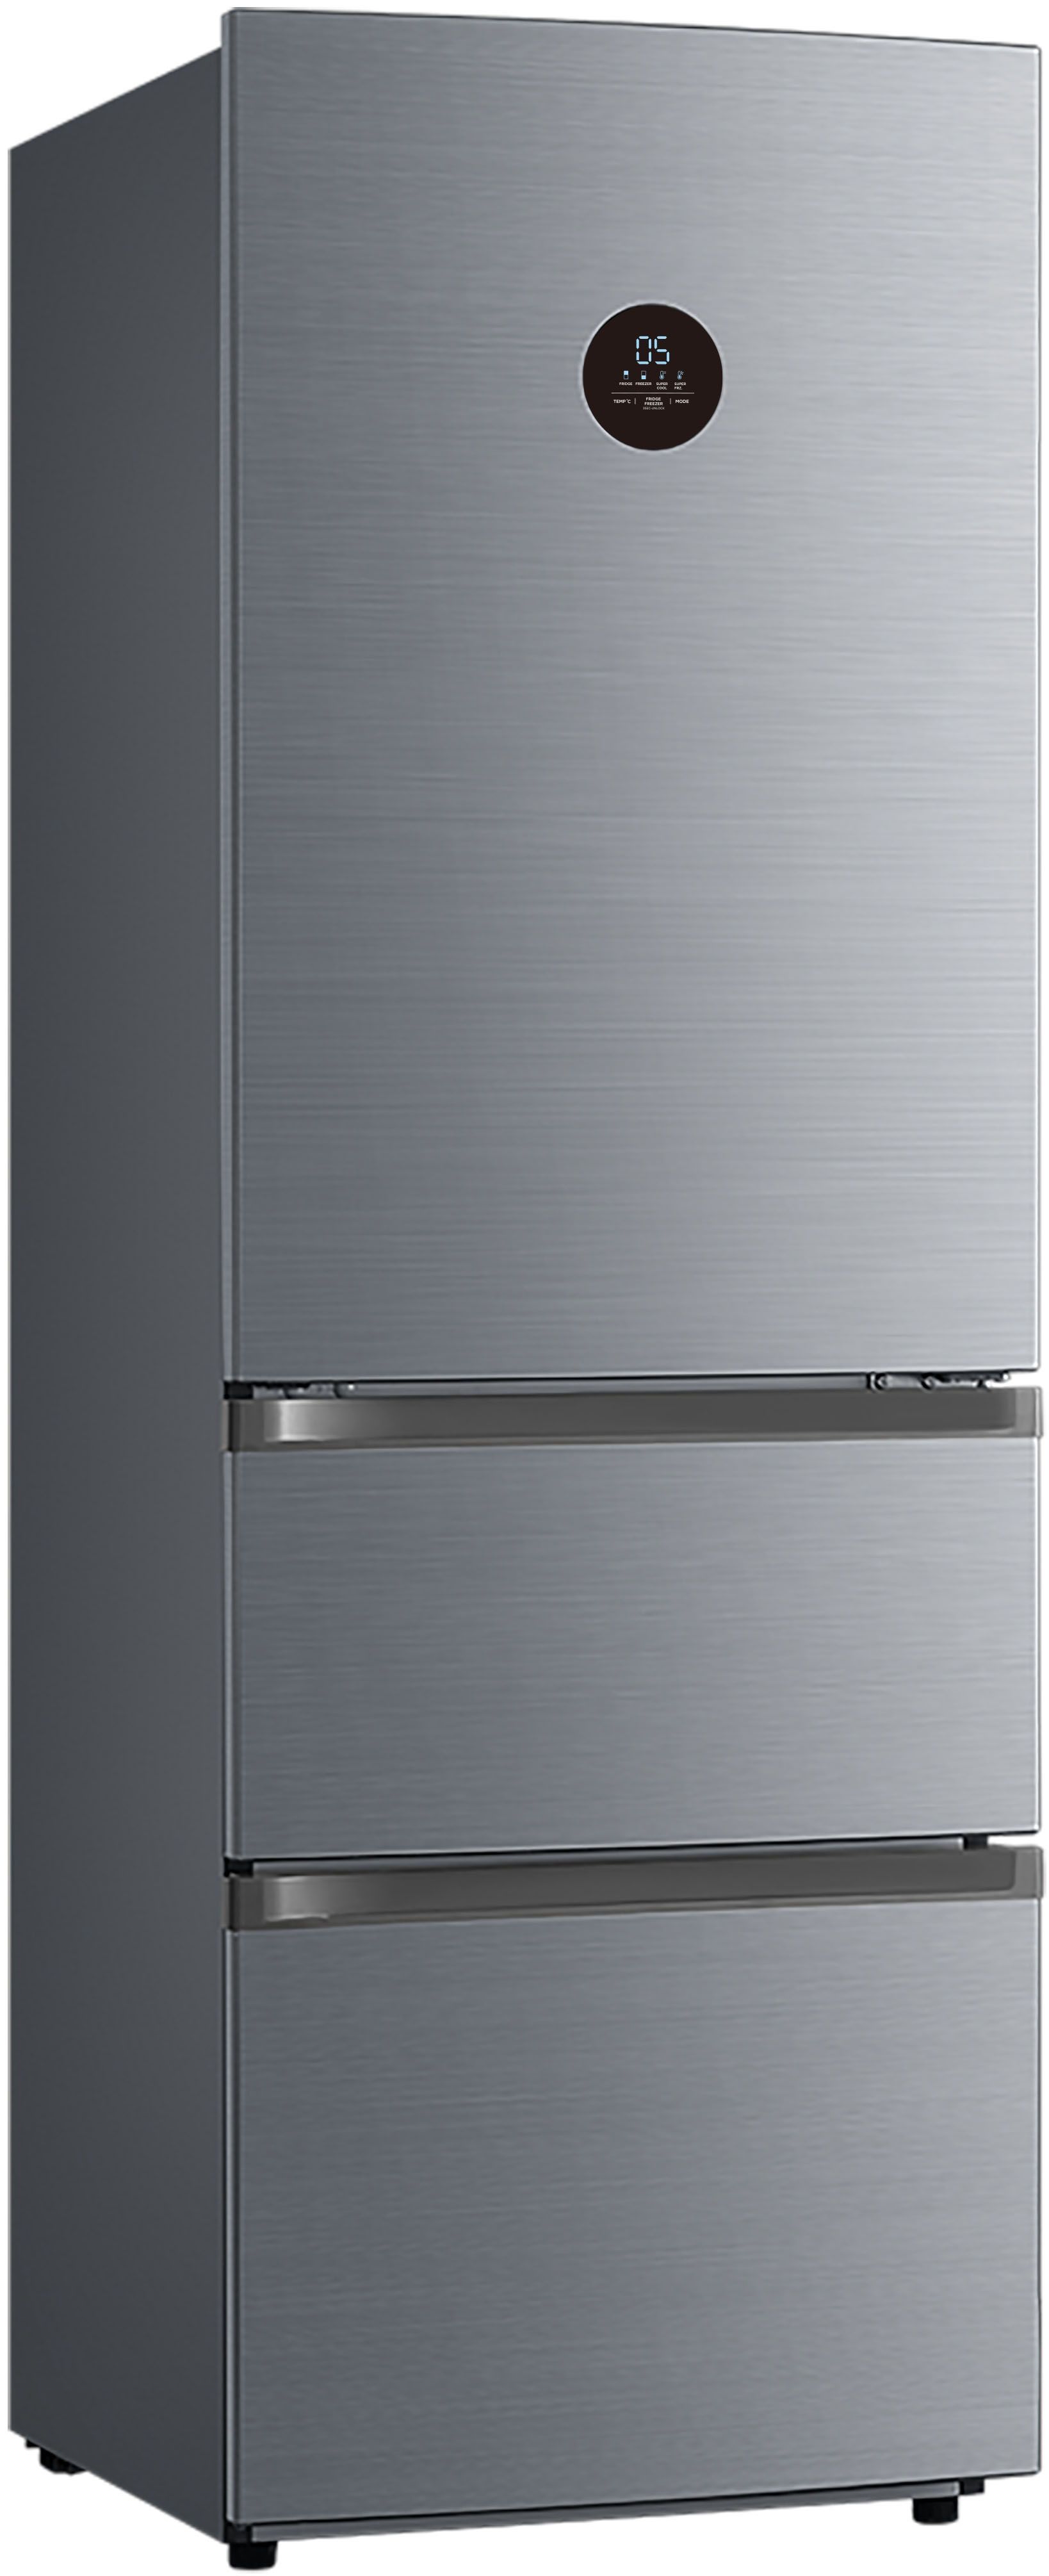 фото Холодильник korting knff 61889 x silver